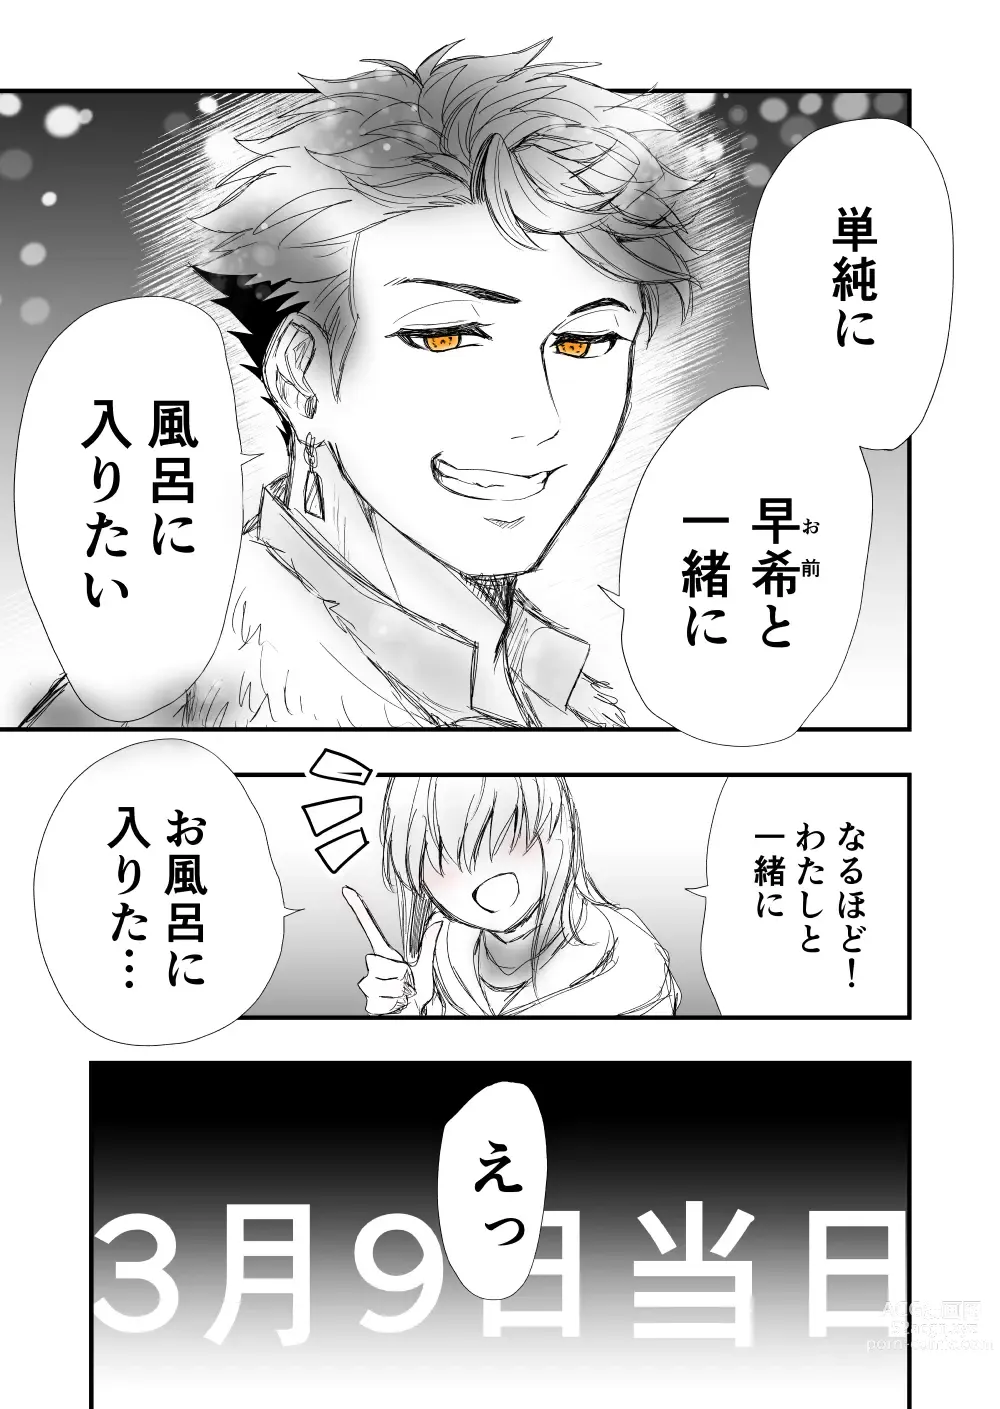 Page 5 of doujinshi 3